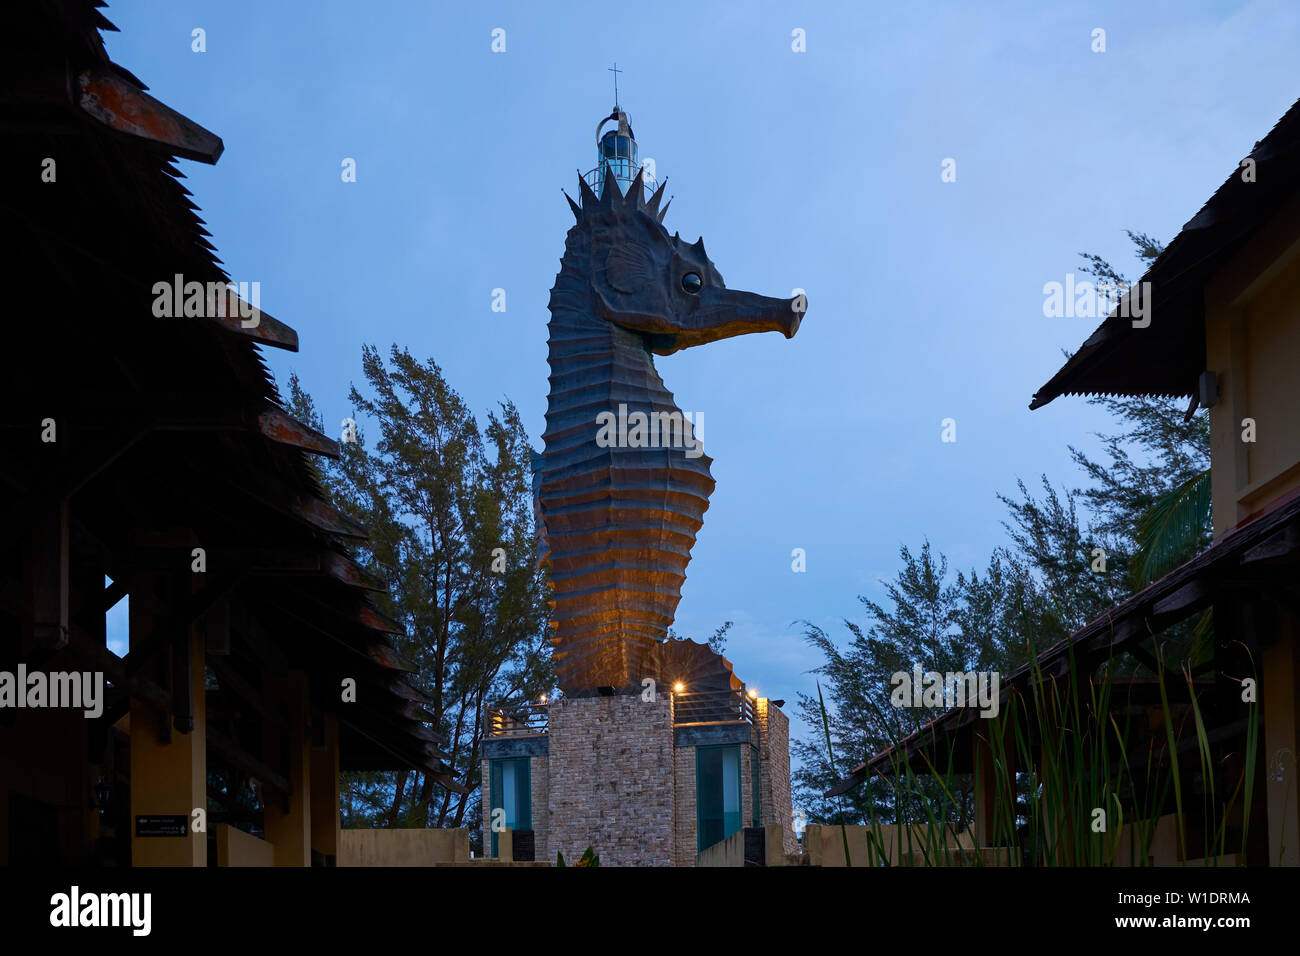 A giant metal seahorse lighthouse sculpture at the sea in Miri, Borneo, Malaysia. Stock Photo